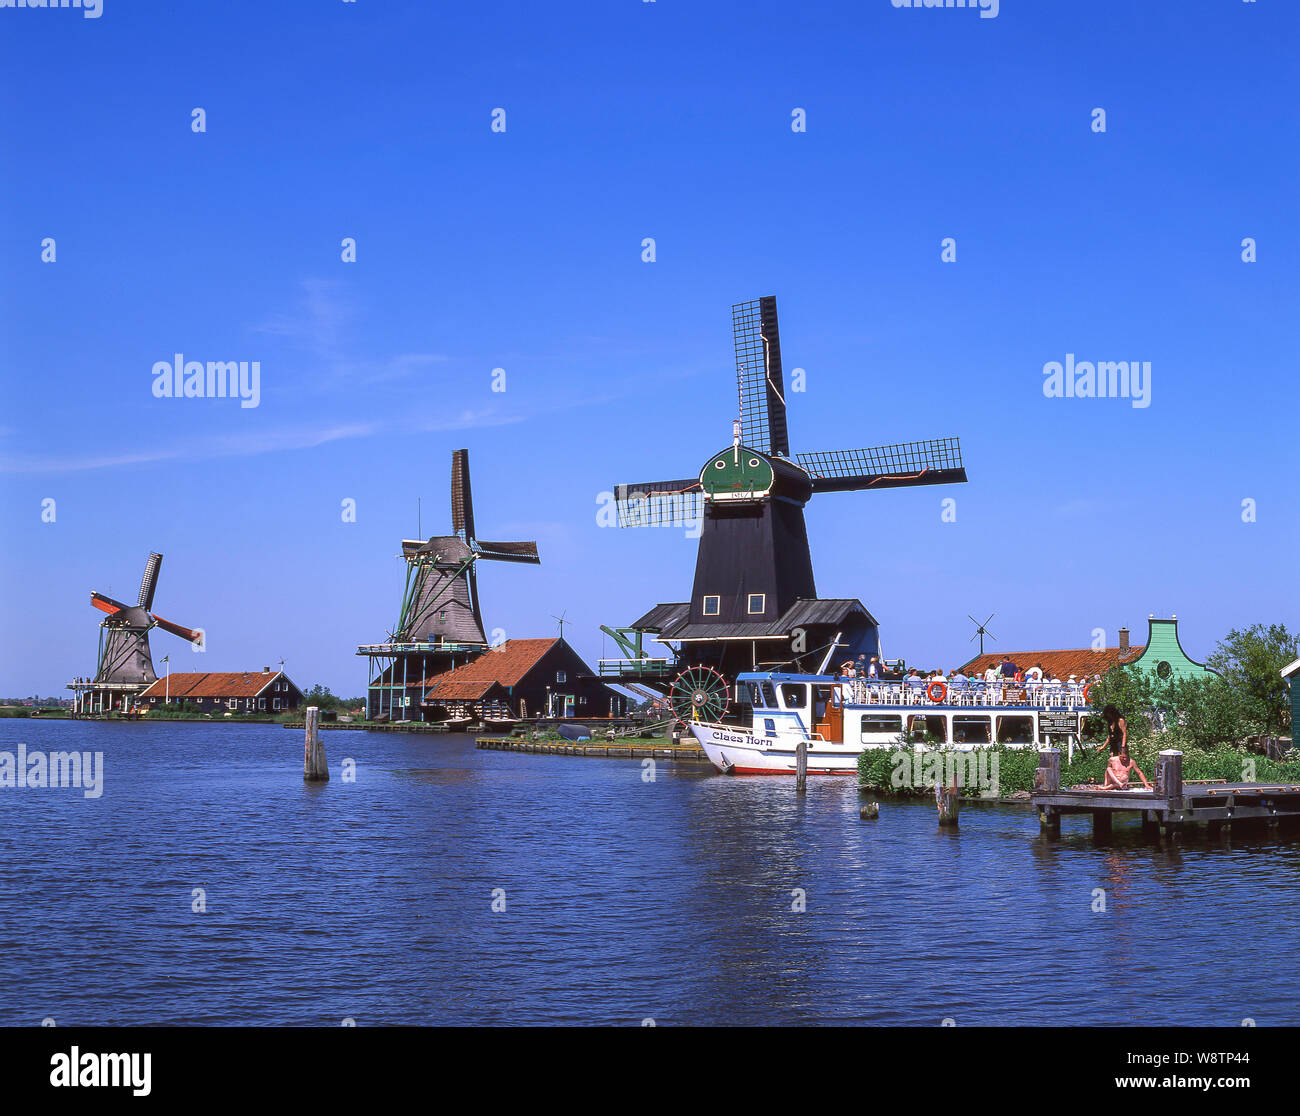 Escursione turistica di barca a mulini a vento di Zaanse Schans, Zaandam, Noord-Holland, Regno dei Paesi Bassi Foto Stock